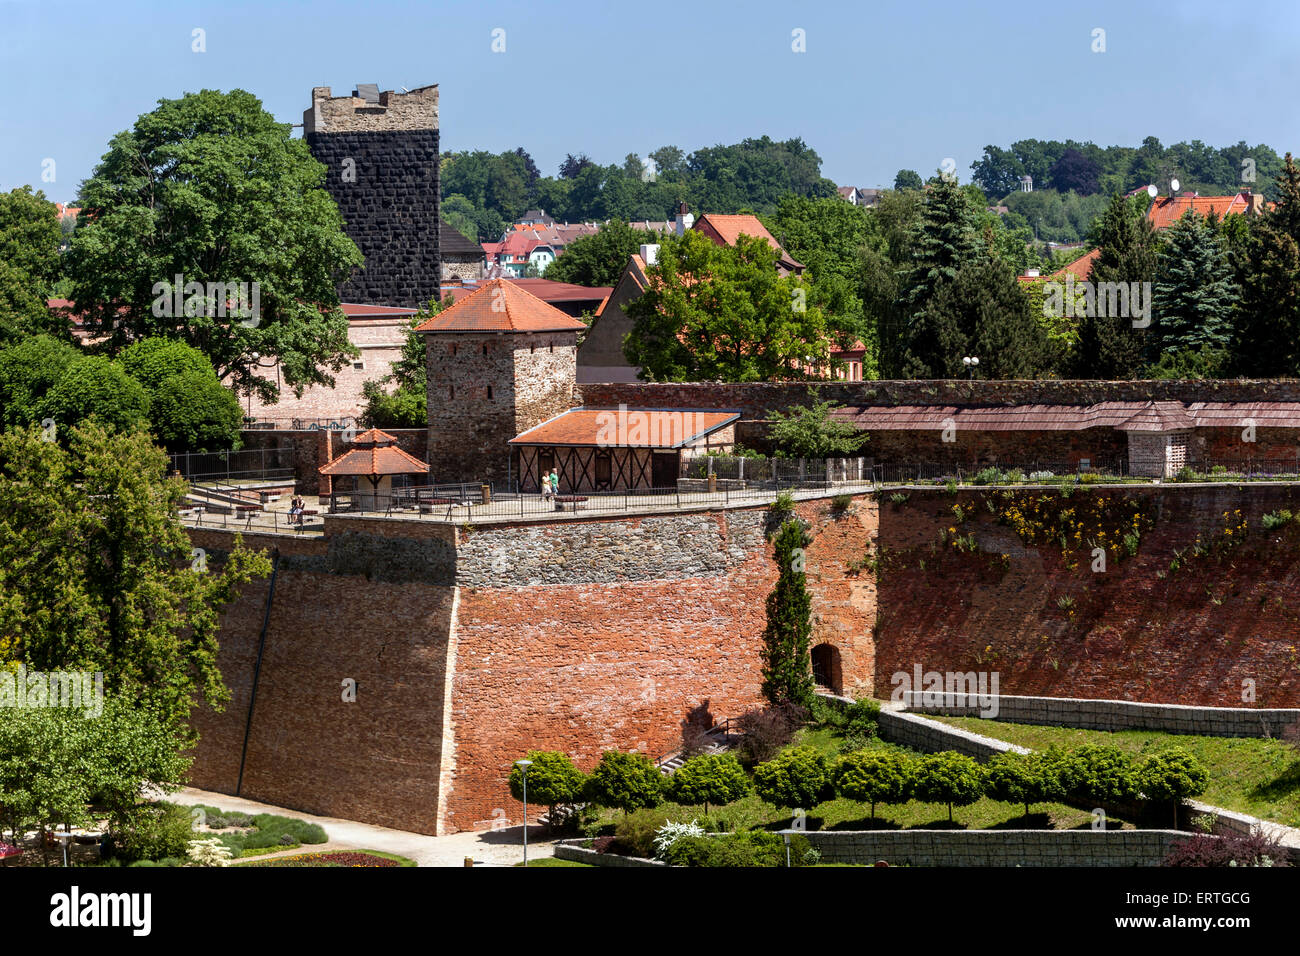 Historische Altstadt, Schwarzer Turm, Burg, Cheb (Eger), West-Böhmen, Tschechische Republik Stockfoto